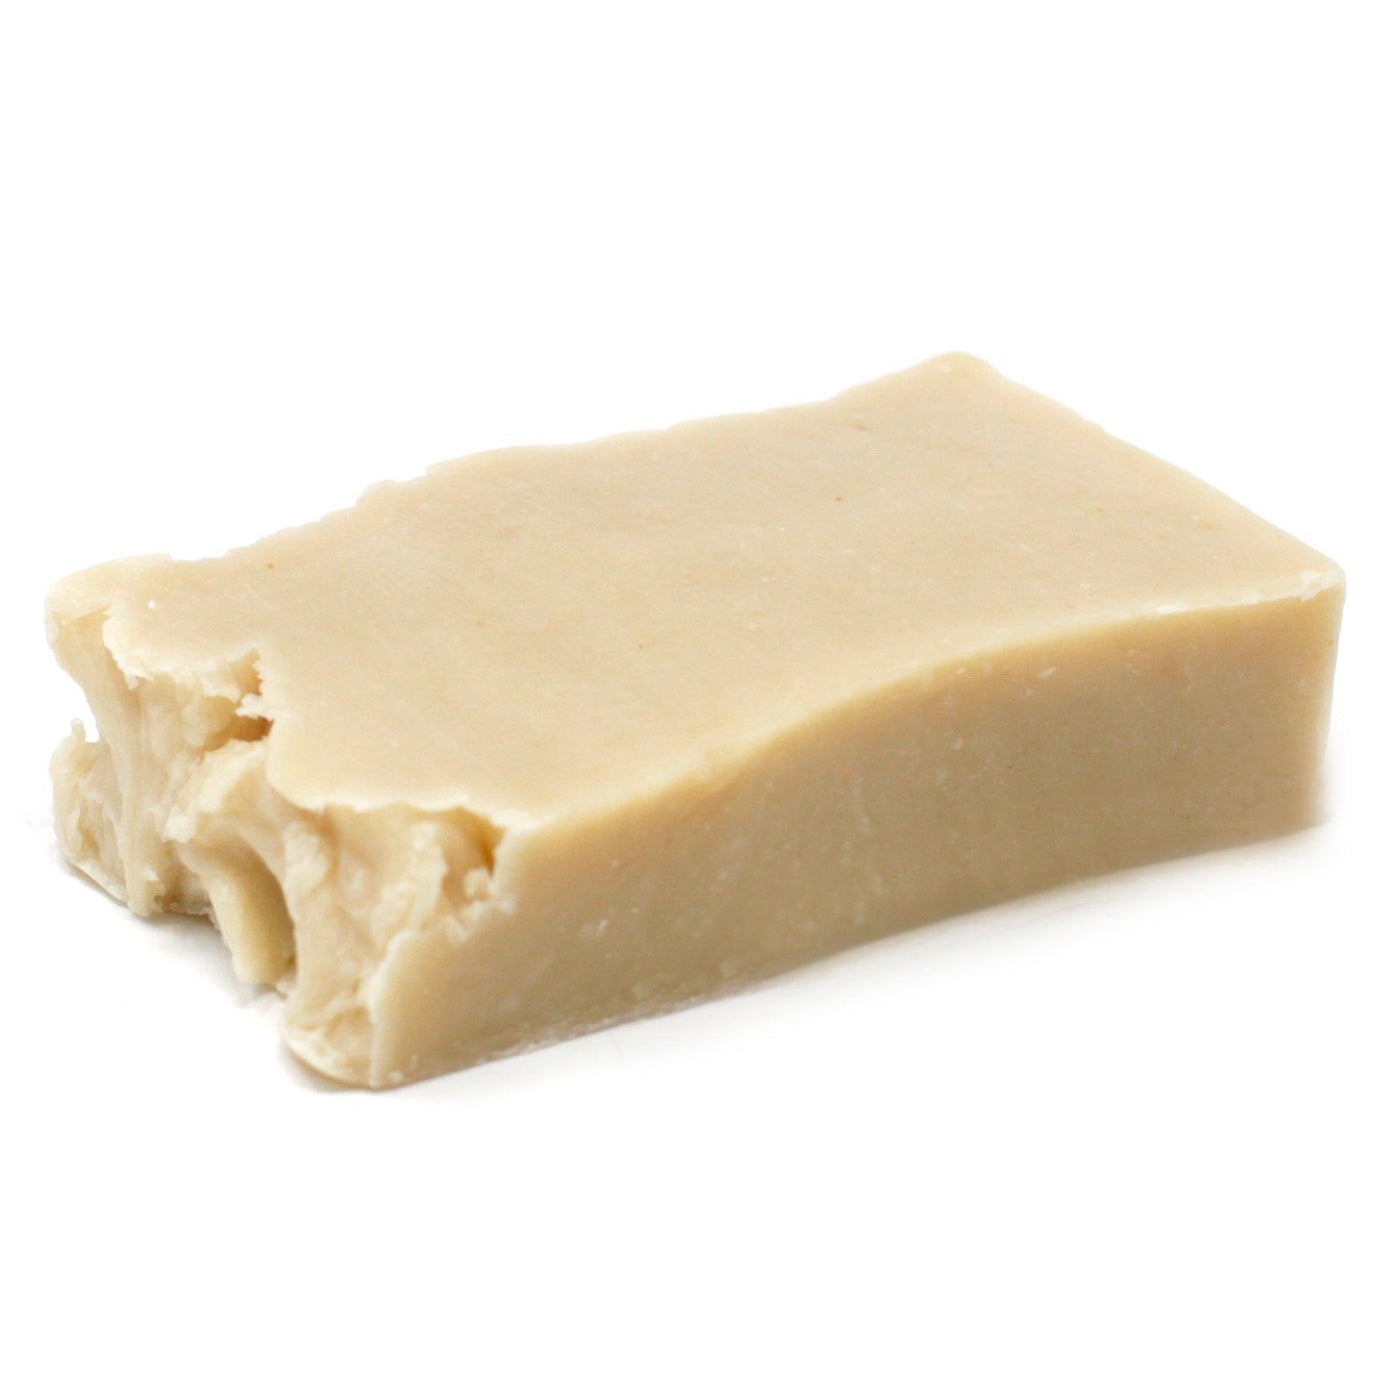 Donkey Milk Paraben Free Olive Body Oil Soap Loaf And Slices.